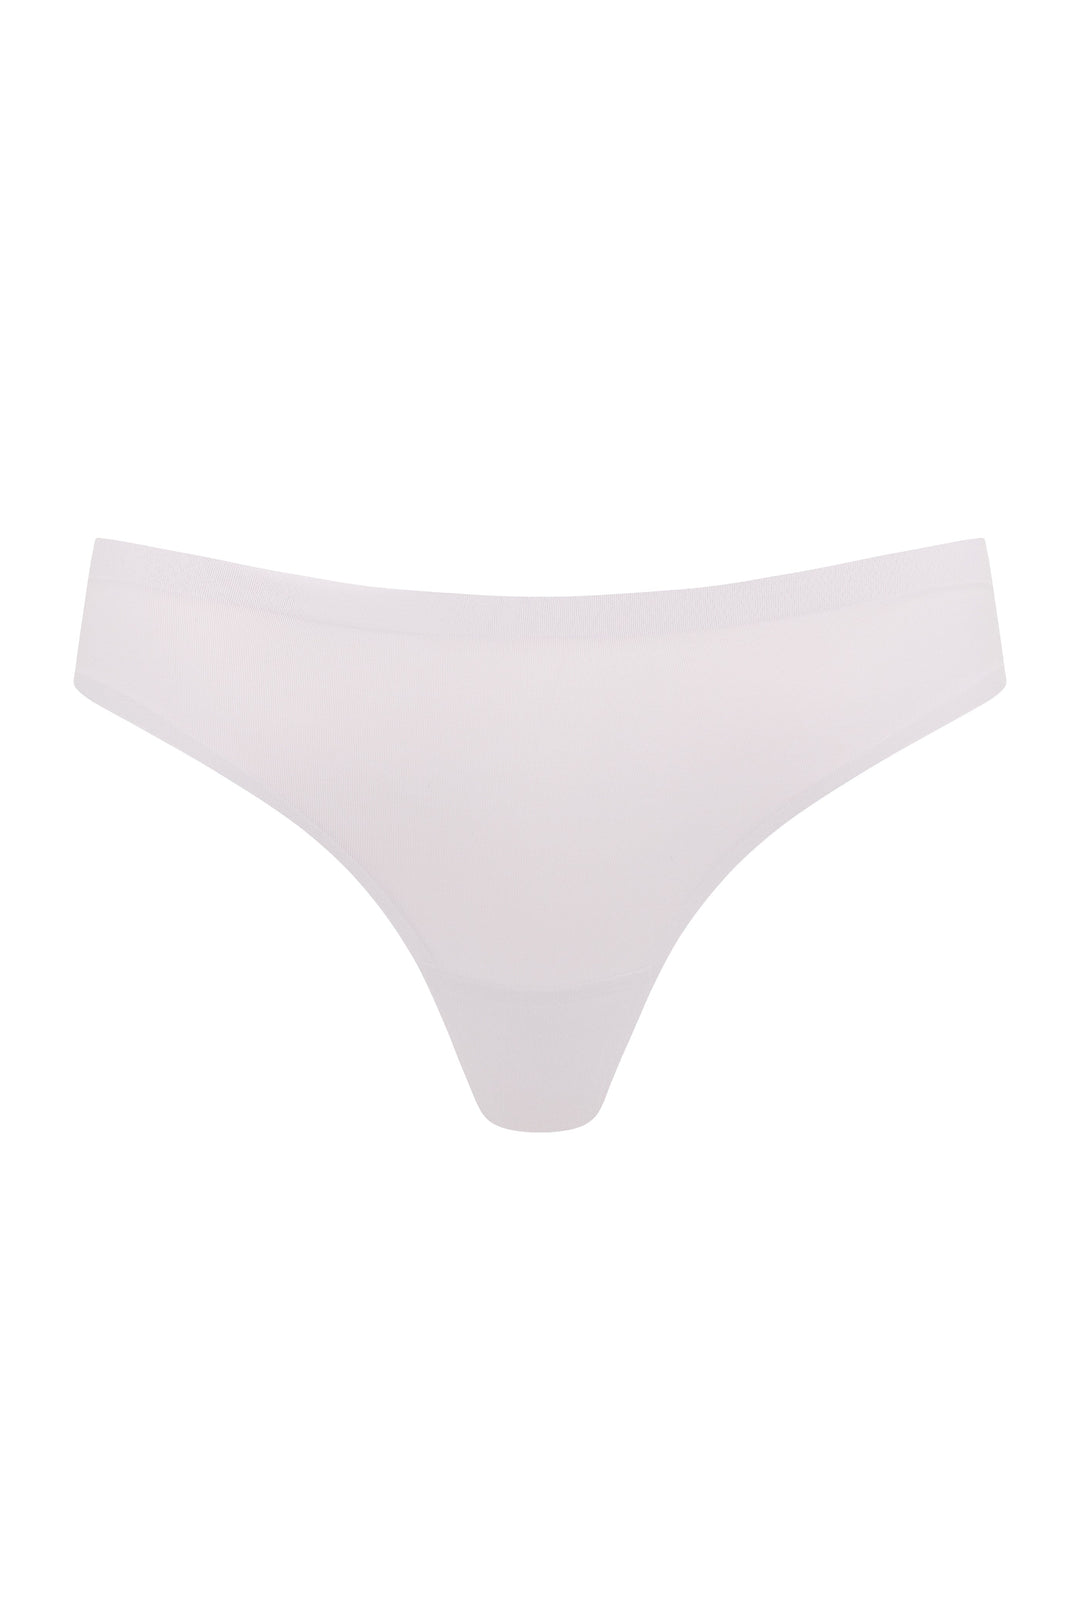 6 Pack Polyamide Invisible No Show Laser Cut High Waist Brief Panty  Underwear